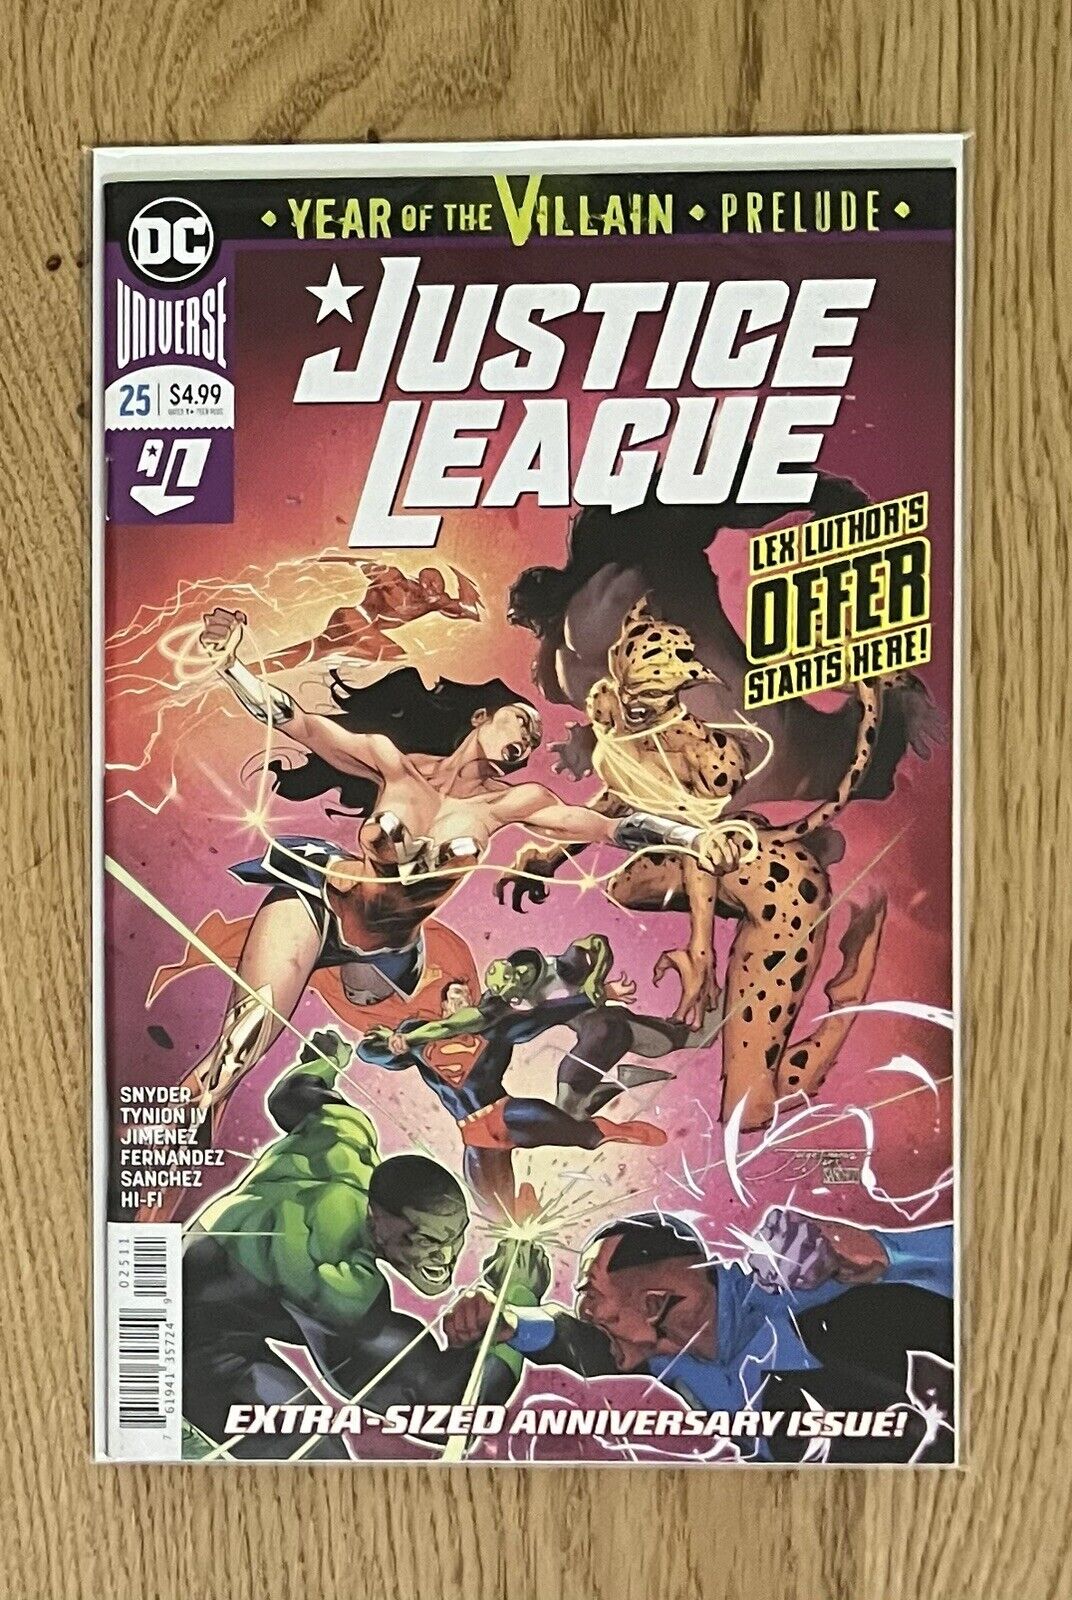 DC COMICS JUSTICE LEAGUE #25 AUGUST 2019 1ST PRINT Year Of The Villain